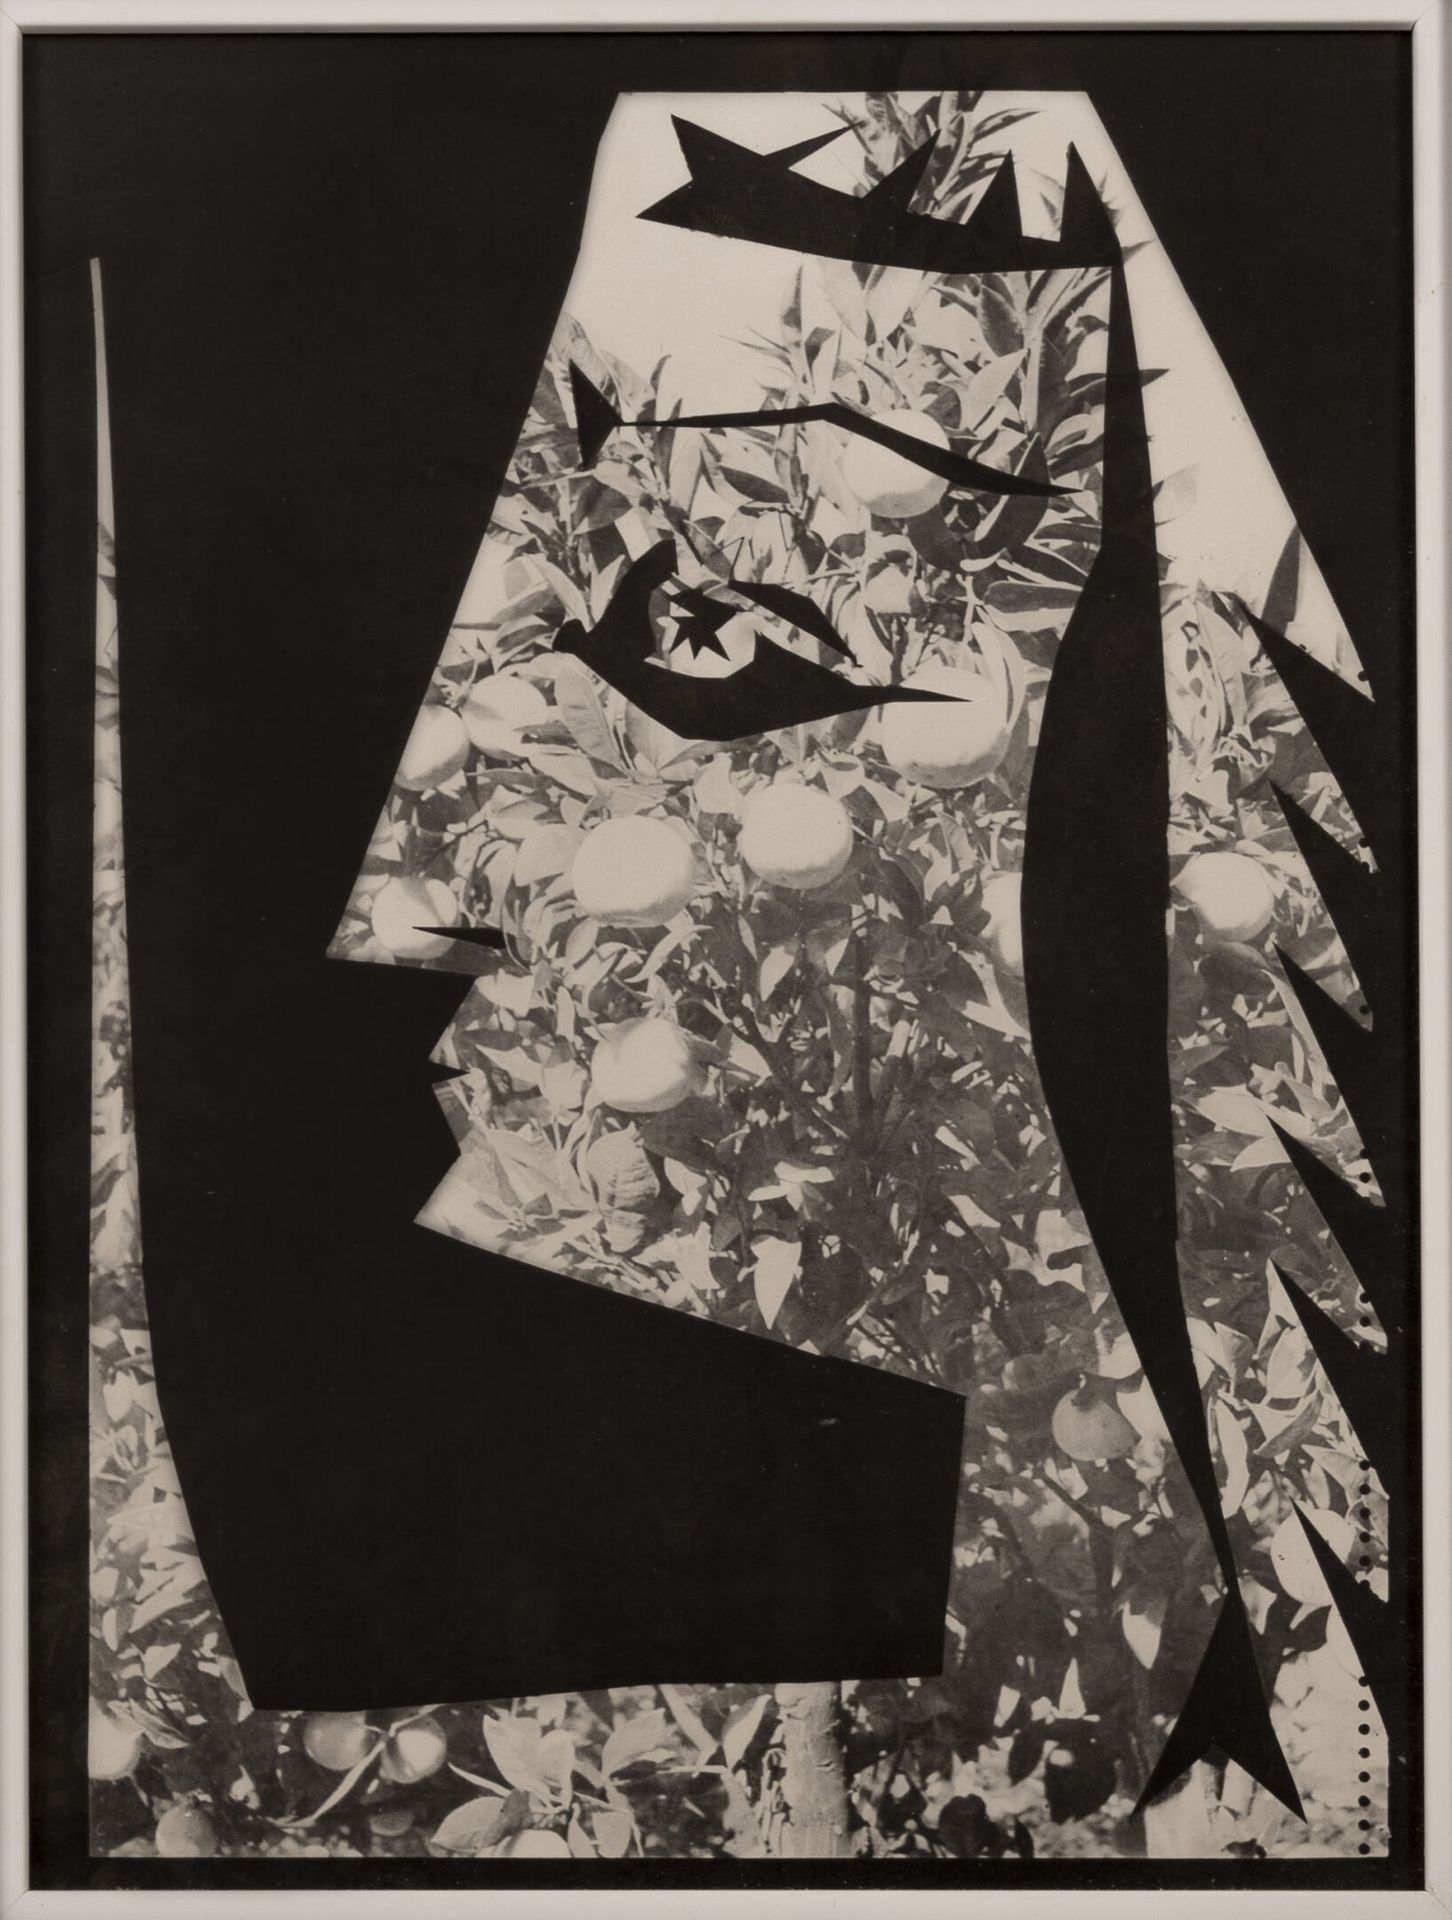 D'aprés Pablo Picasso (1881-1973) Jacqueline mit Früchten. 

Lithografie in Schw&hellip;